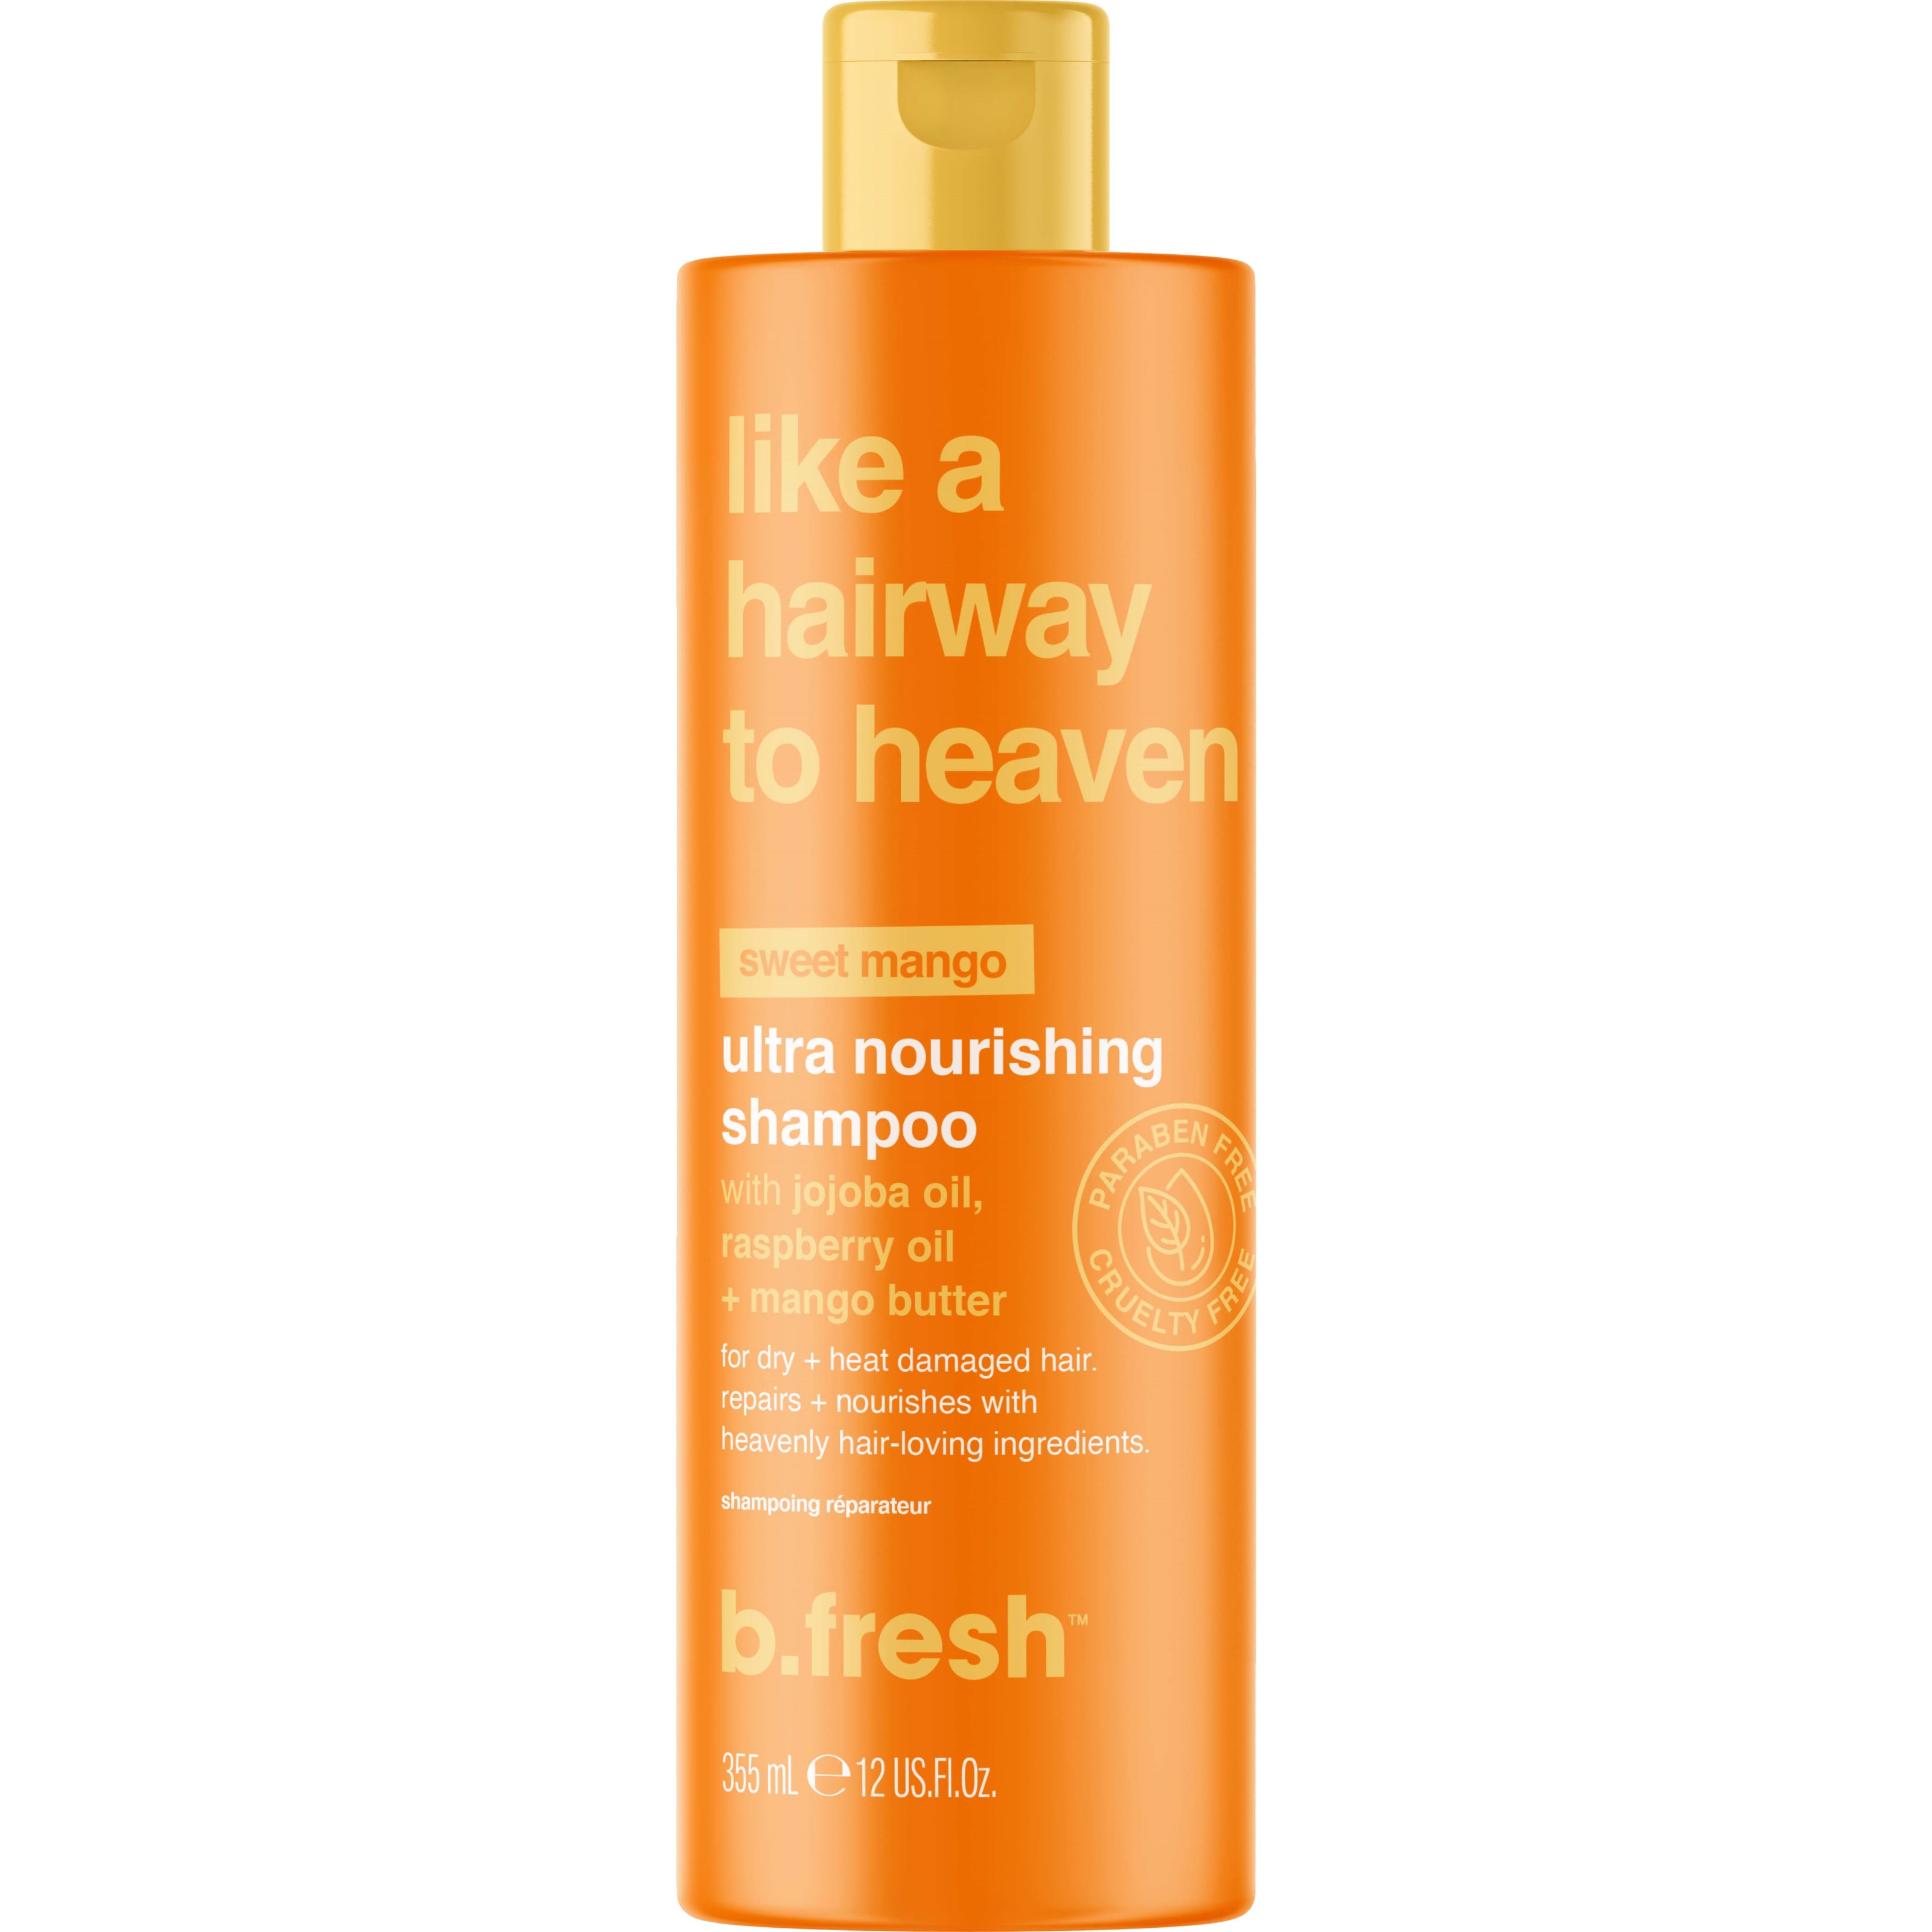 b.fresh Like a hairway to heaven ultra nourishing shampoo 355 ml